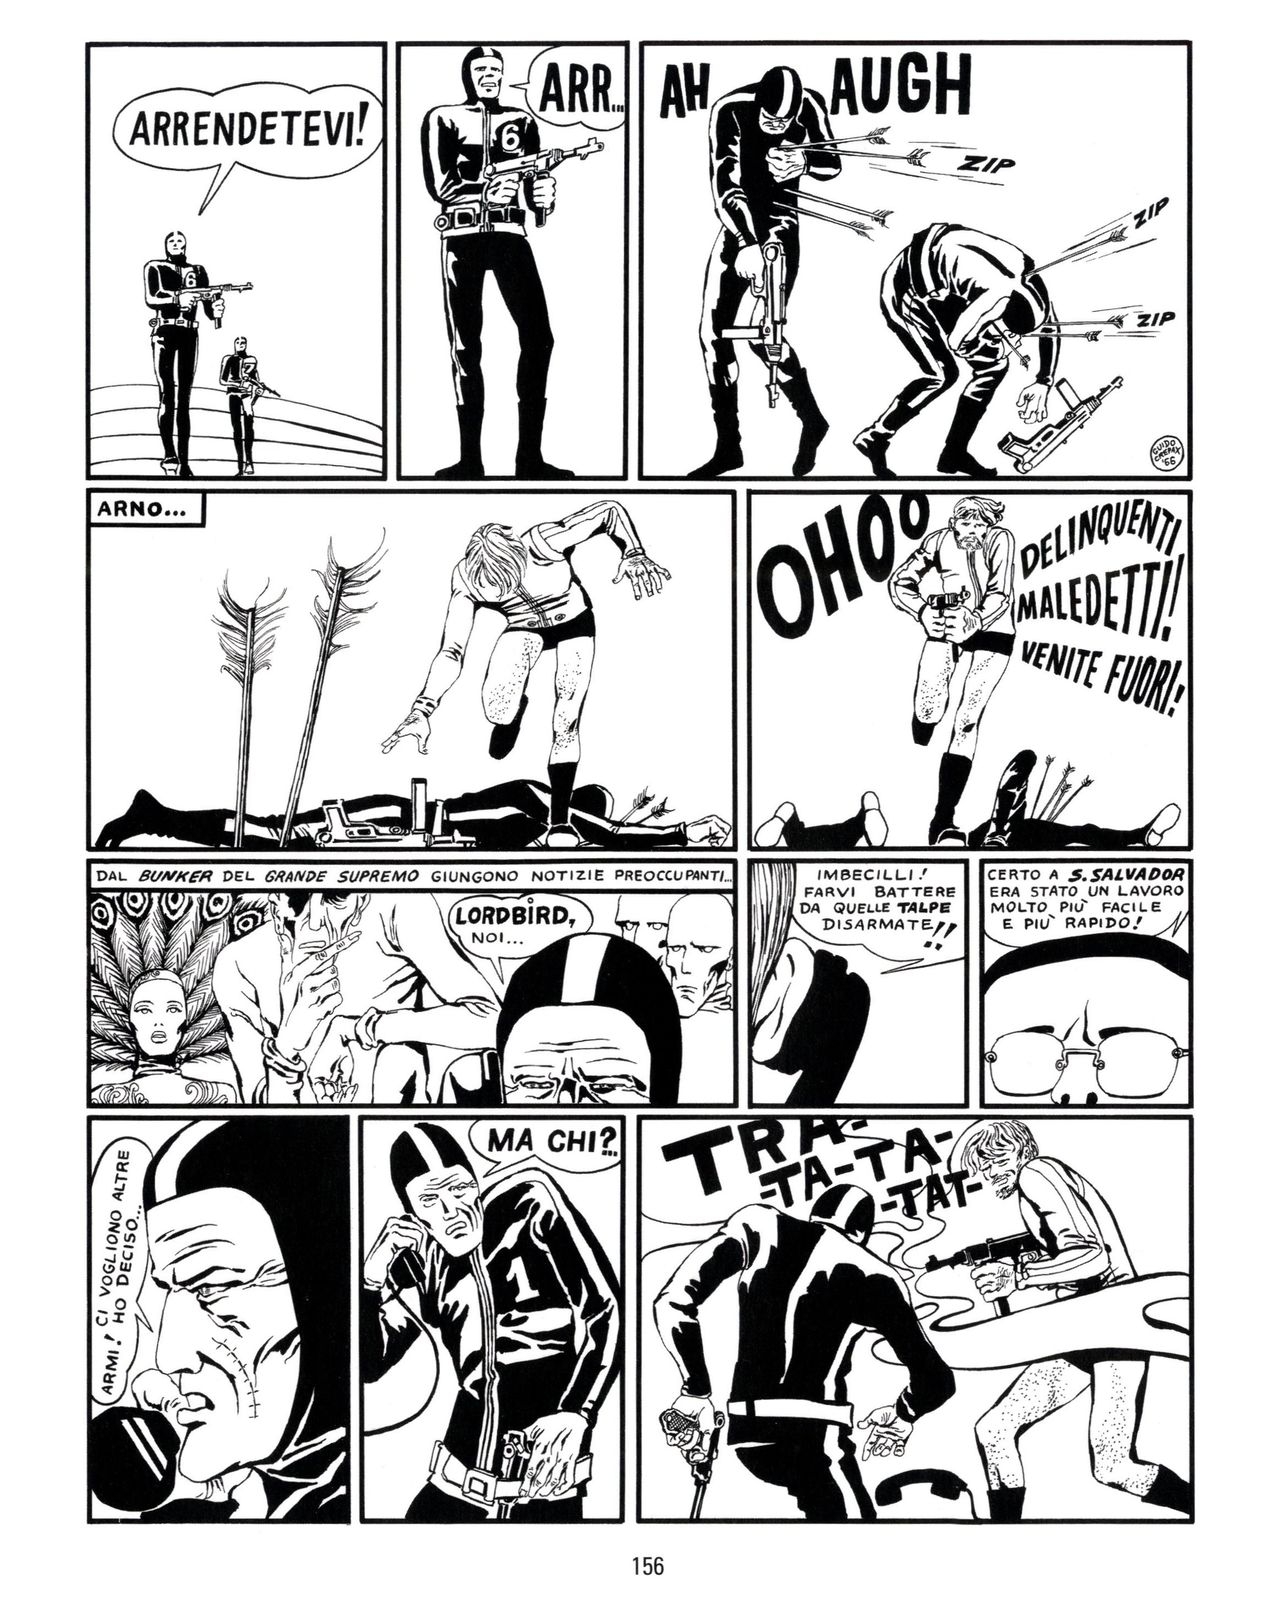 [Guido Crepax] Erotica Fumetti #25 : L'ascesa dei sotterranei : I cavalieri ciechi [Italian] 157